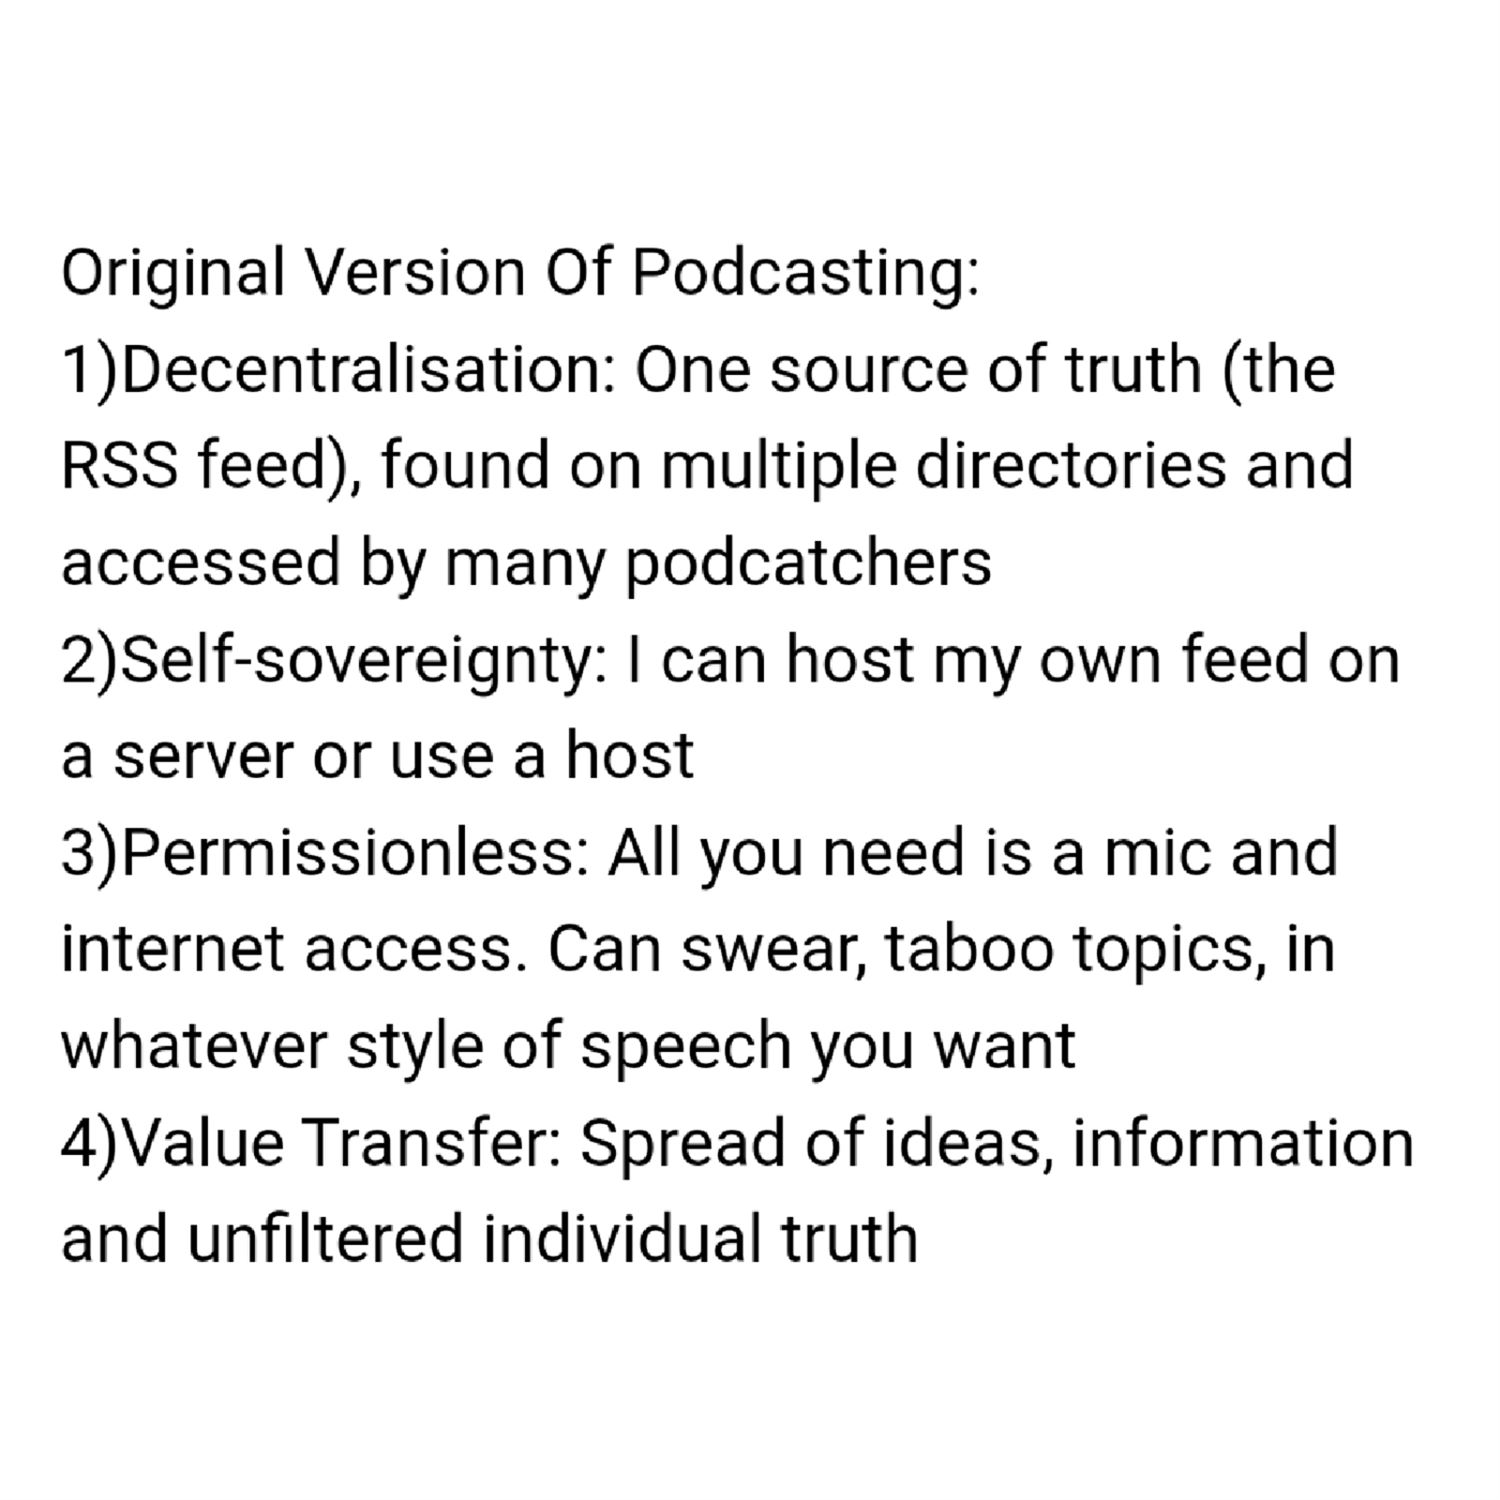 Original version of podcasting